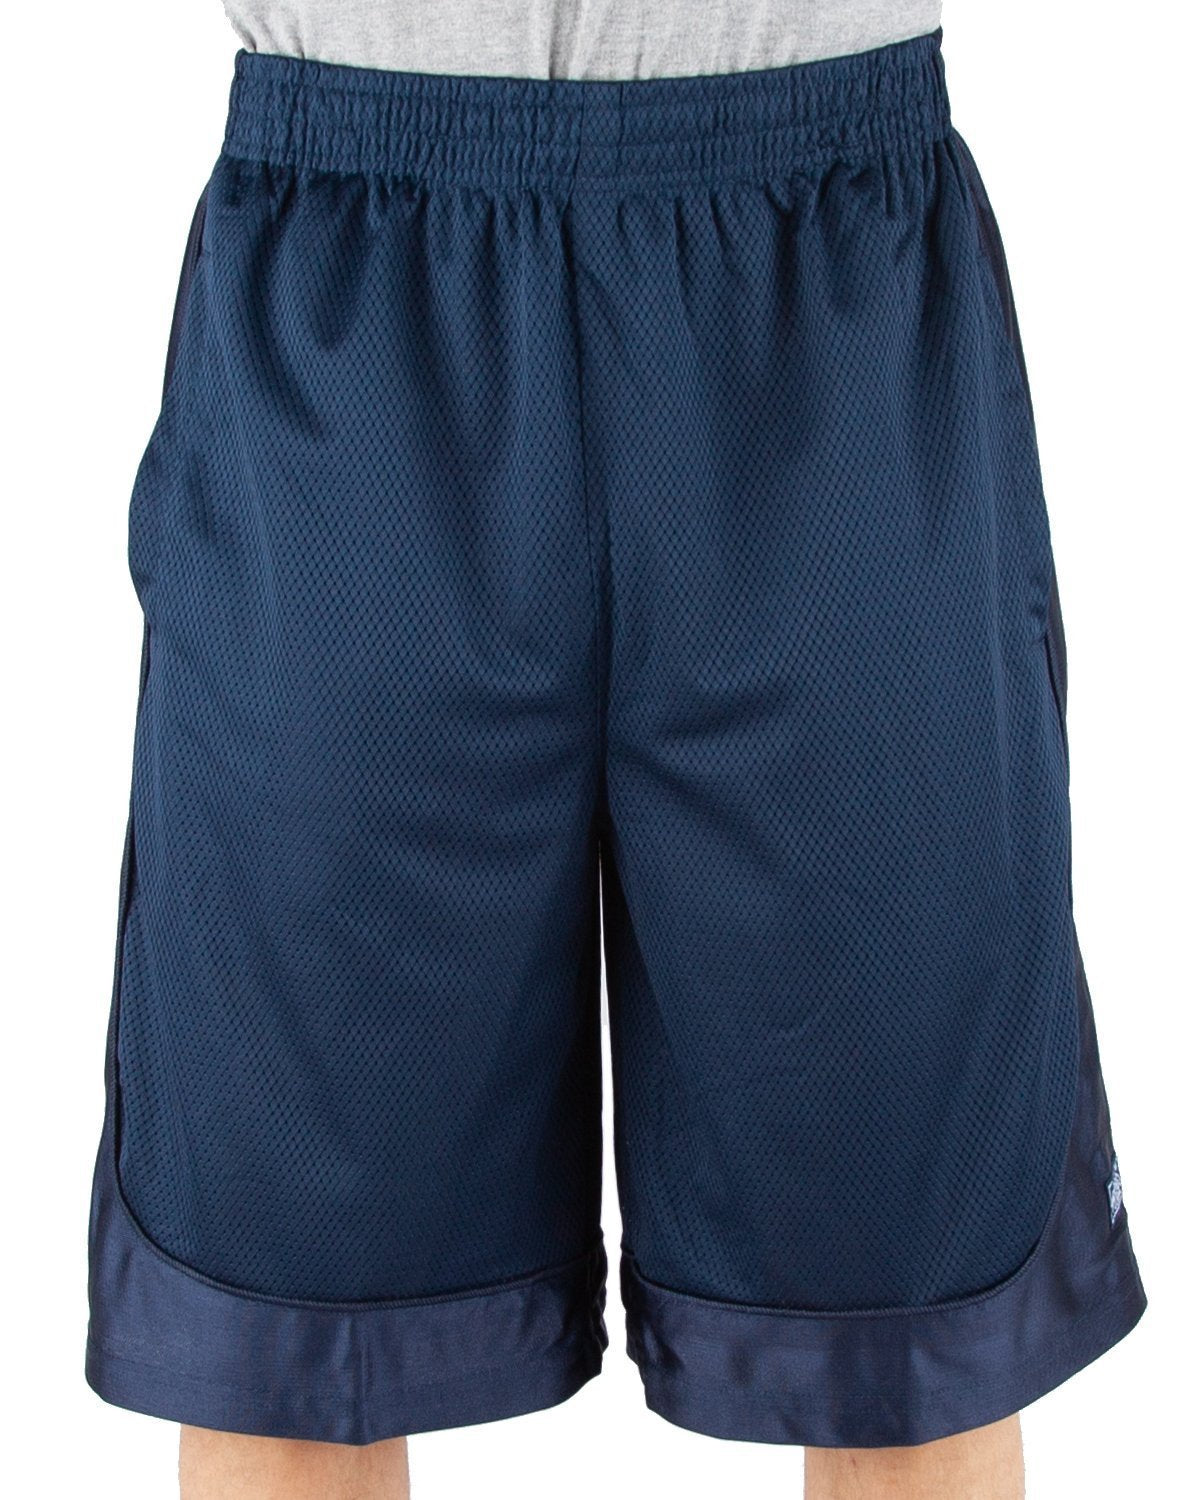 Mesh Shorts XL / Navy